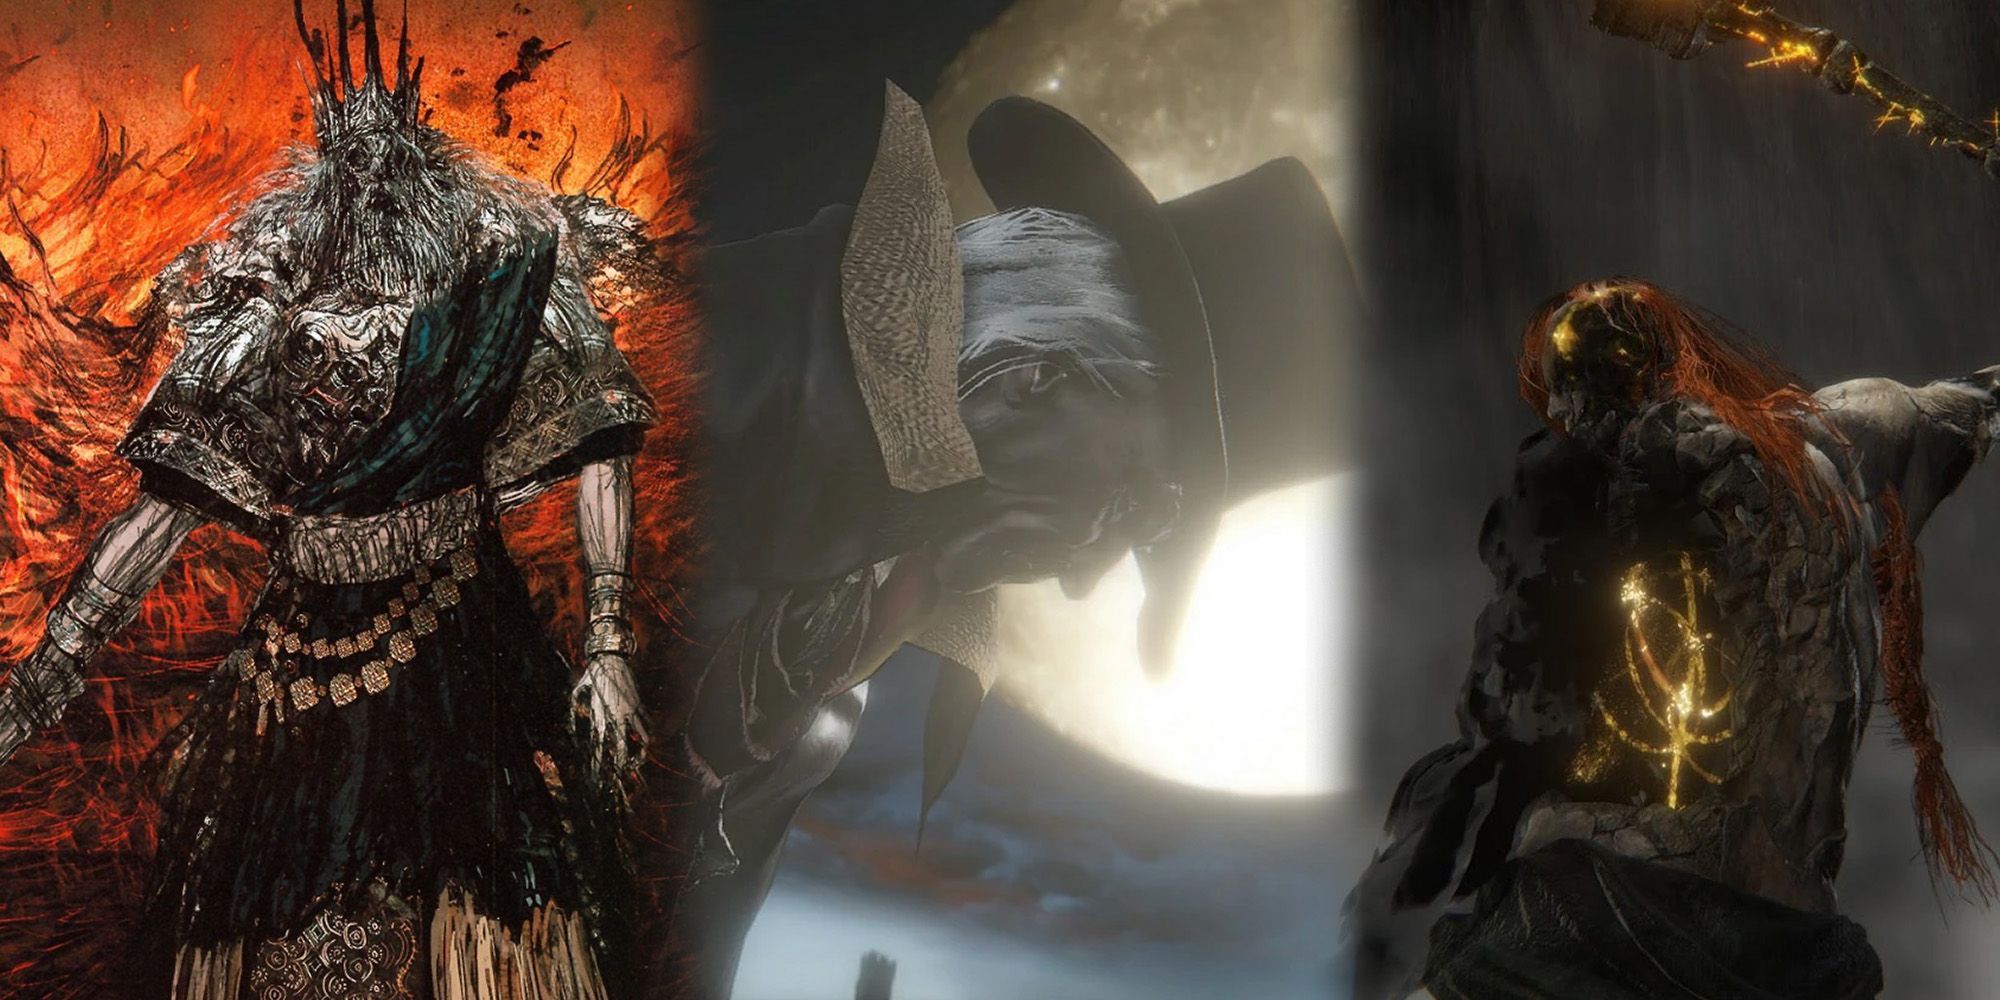 Elden Ring - Three Side By Side Images Of Gwyn In DS1, Gerhman in Bloodborne, and Radagon in Elden Ring